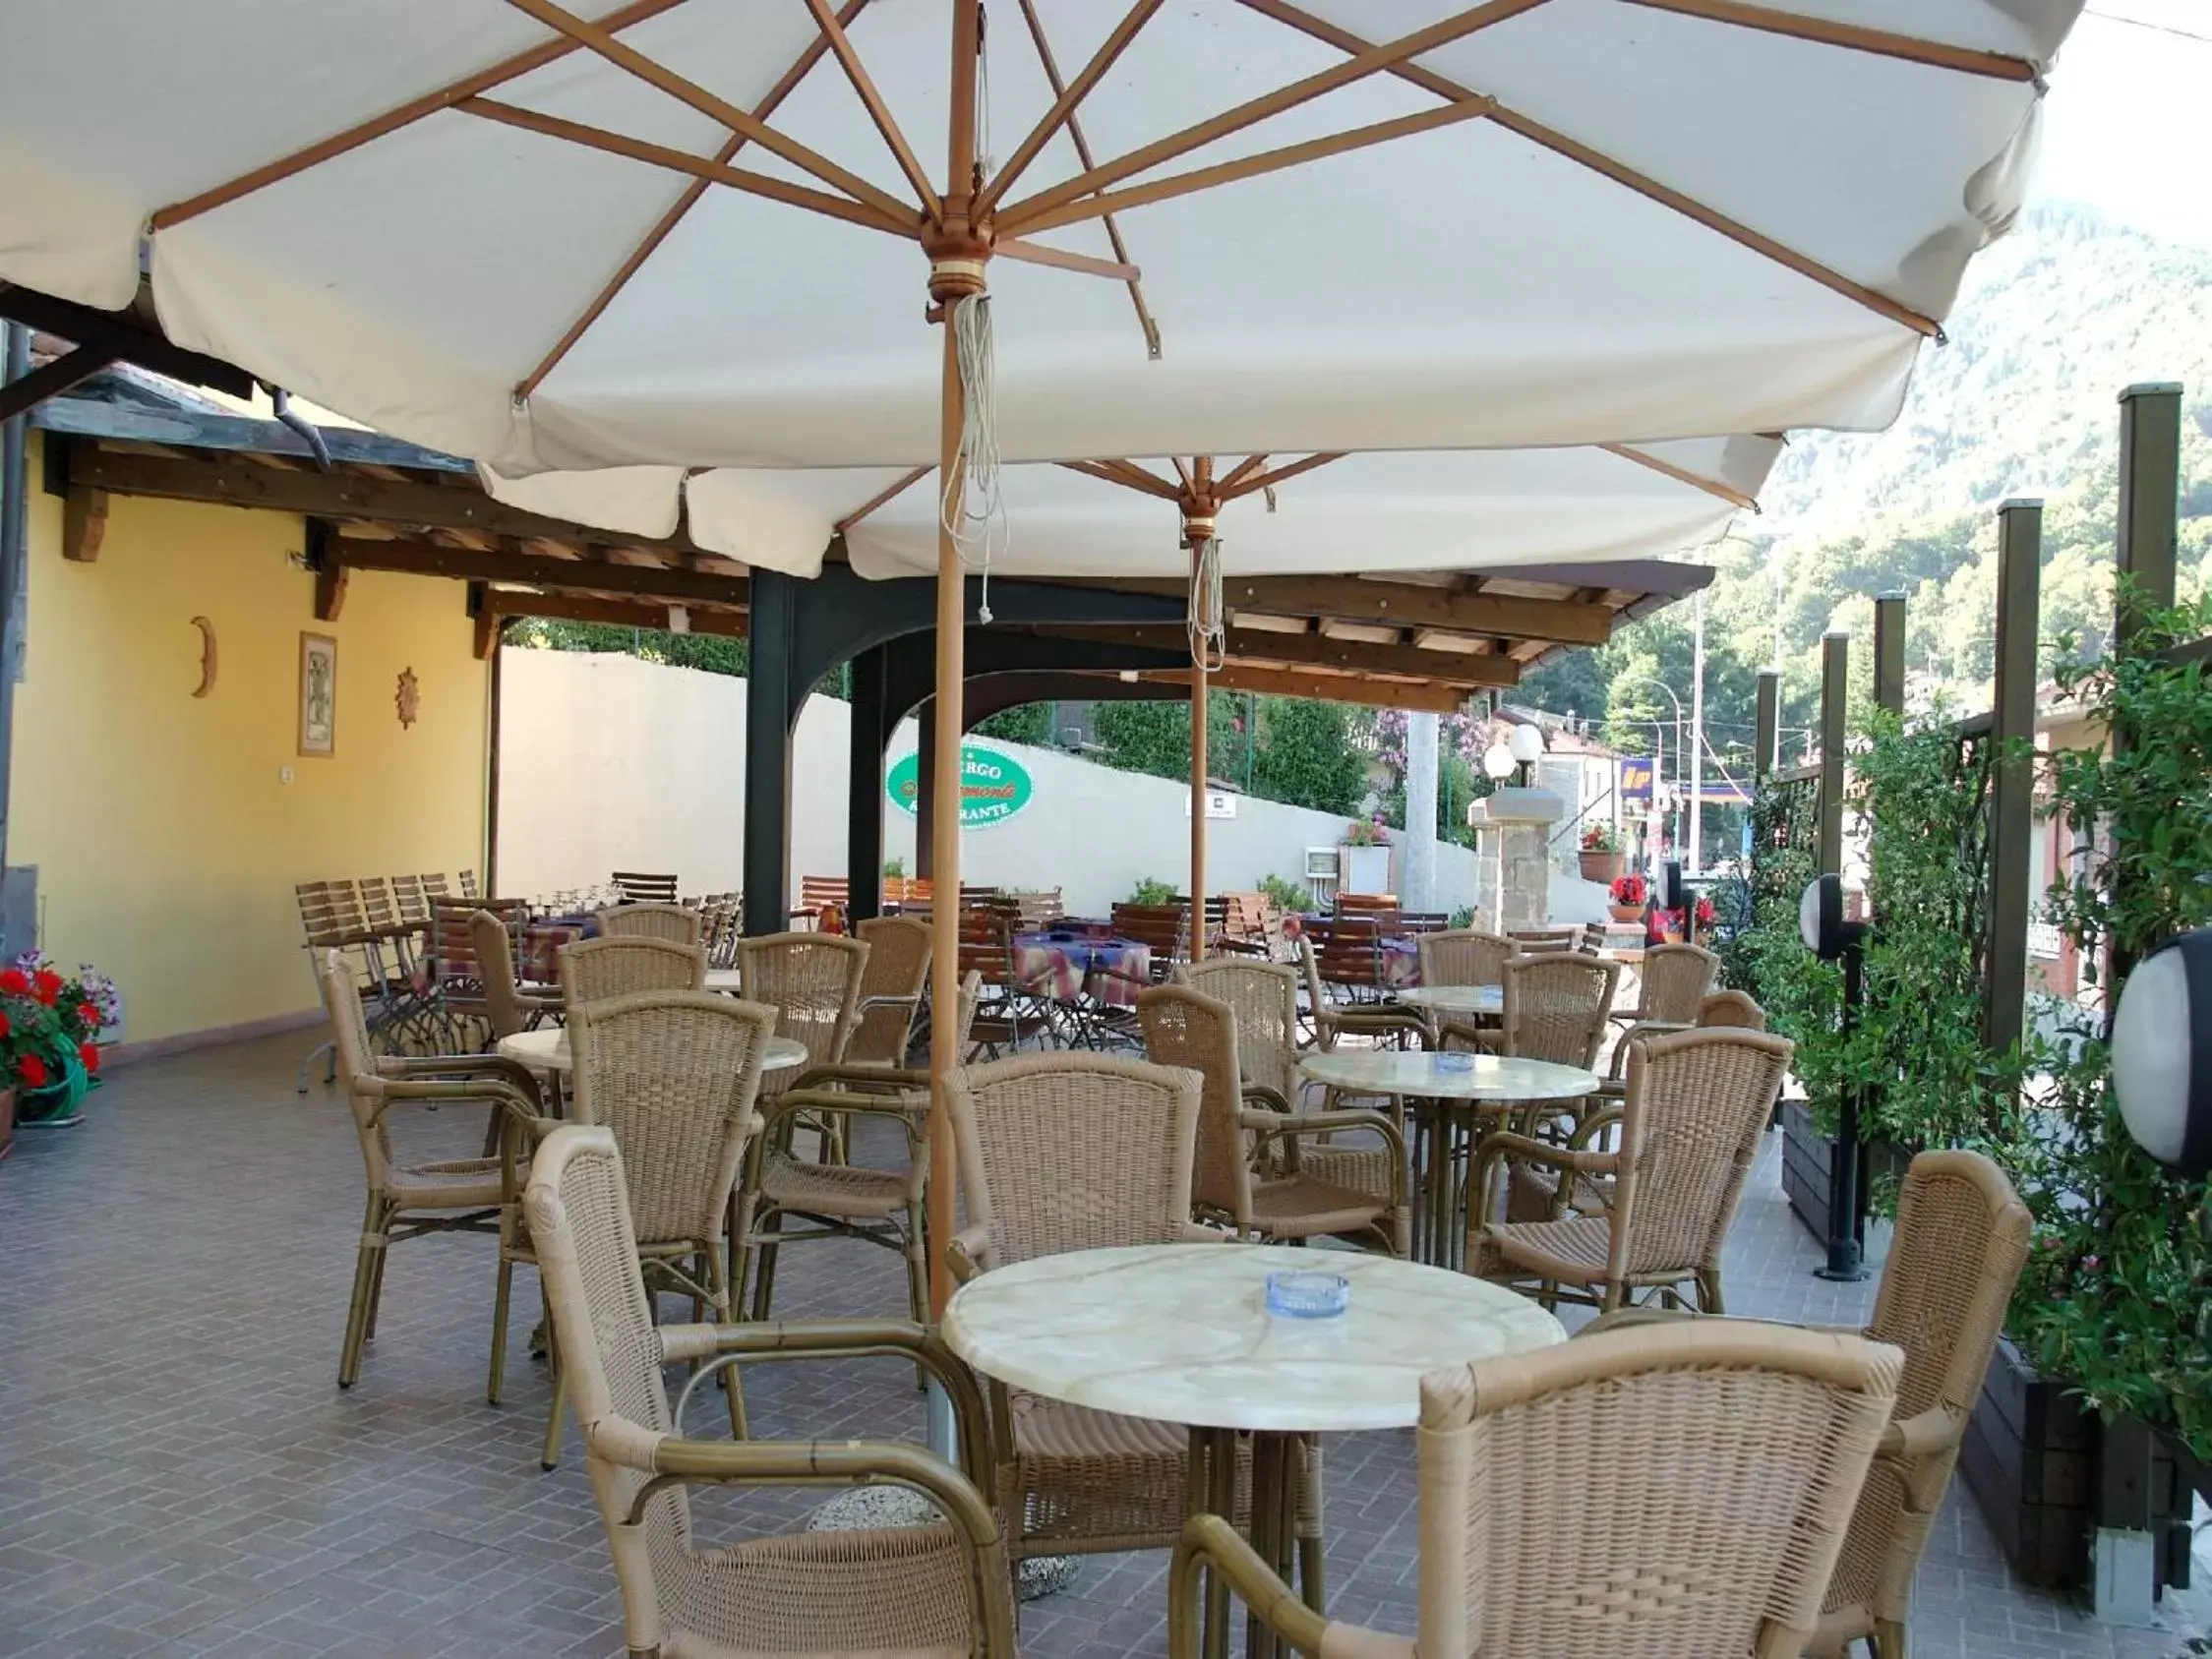 Restaurant/Places to Eat in Albergo Miramonti